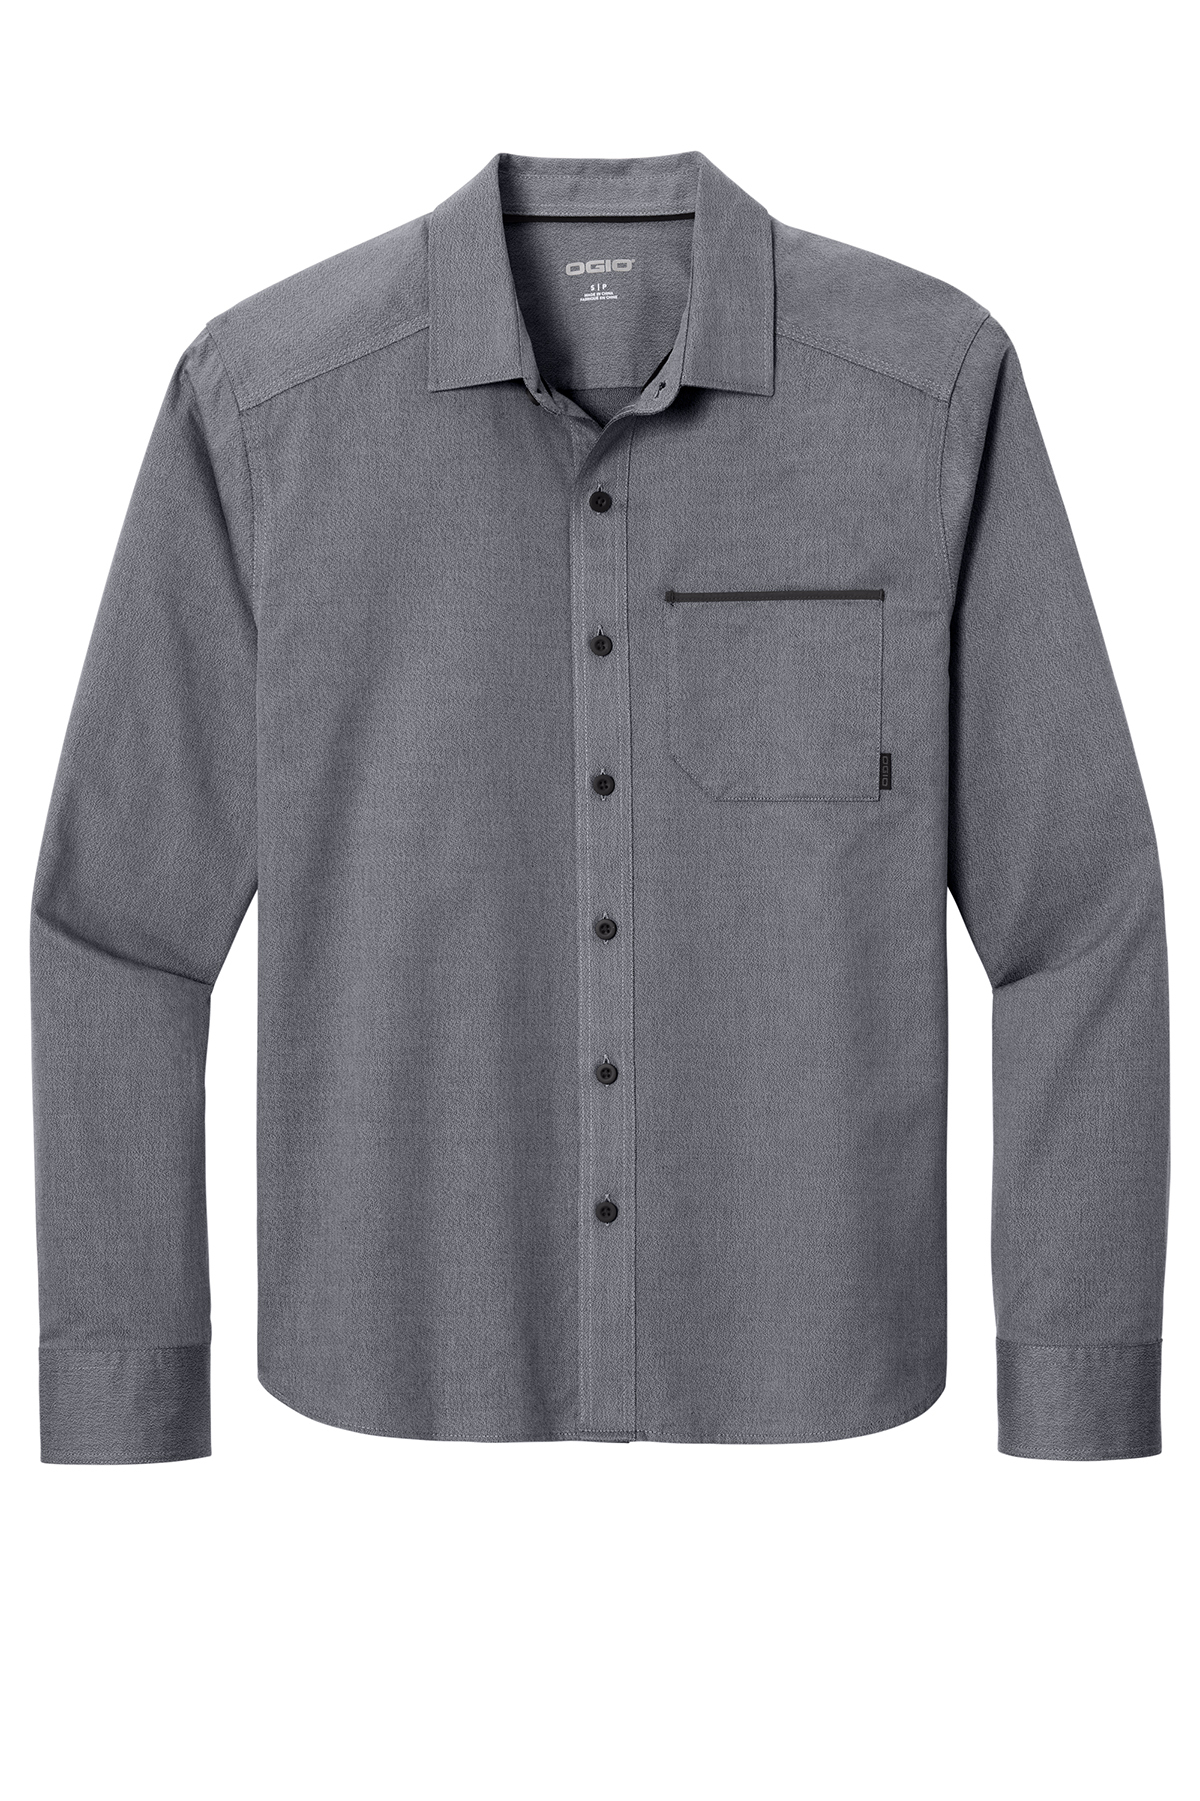 OGIO Urban Shirt | Product | SanMar